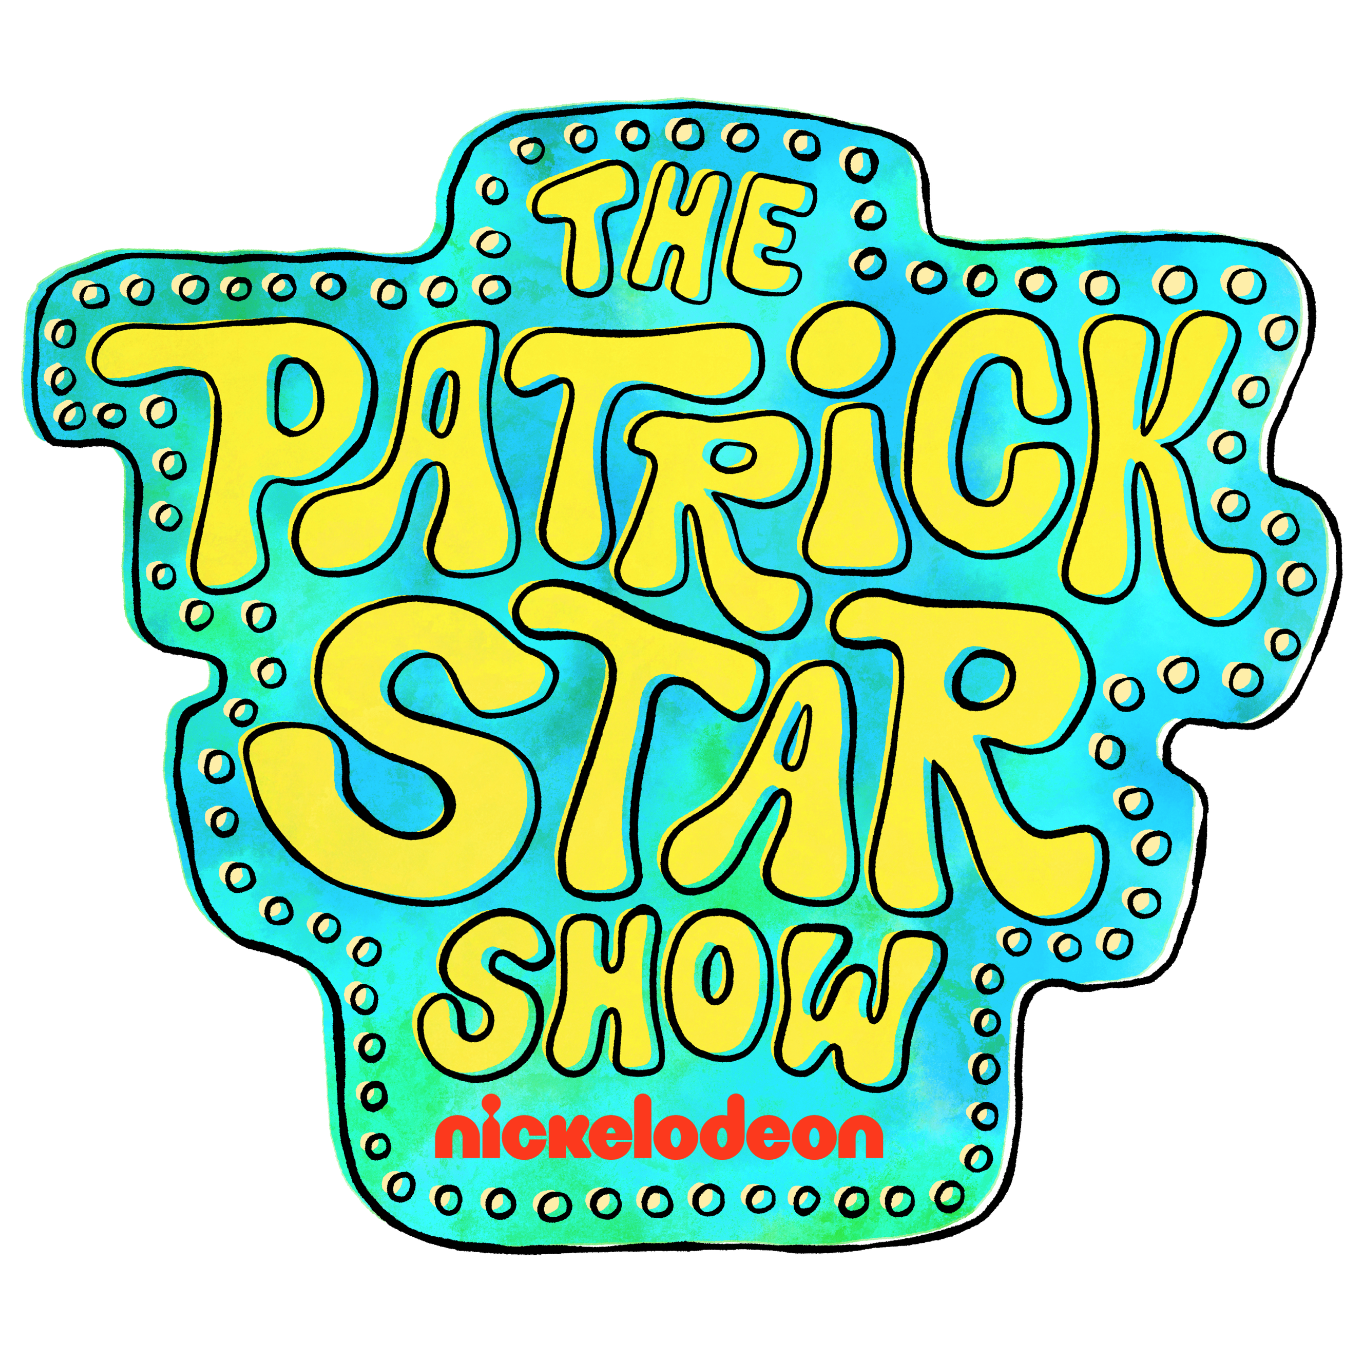 The Patrick Star Show Logo